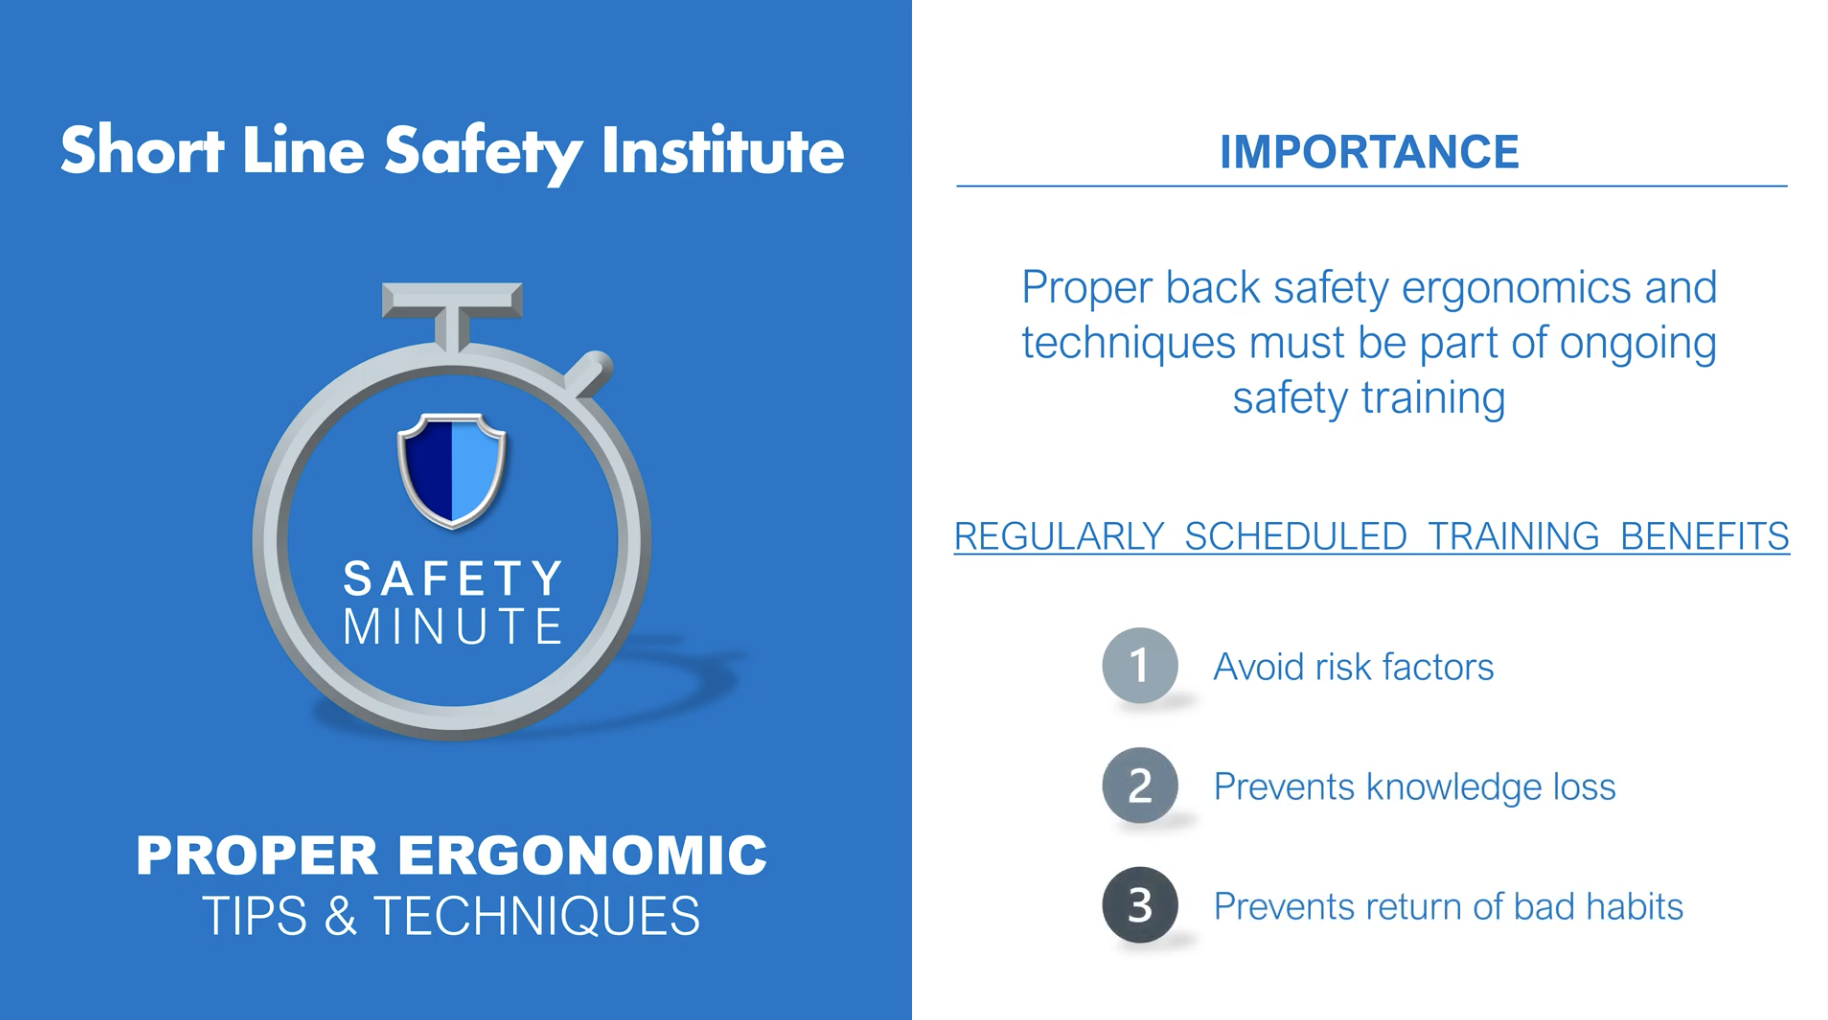 Safety Minute Videos - Short Line Safety Institute